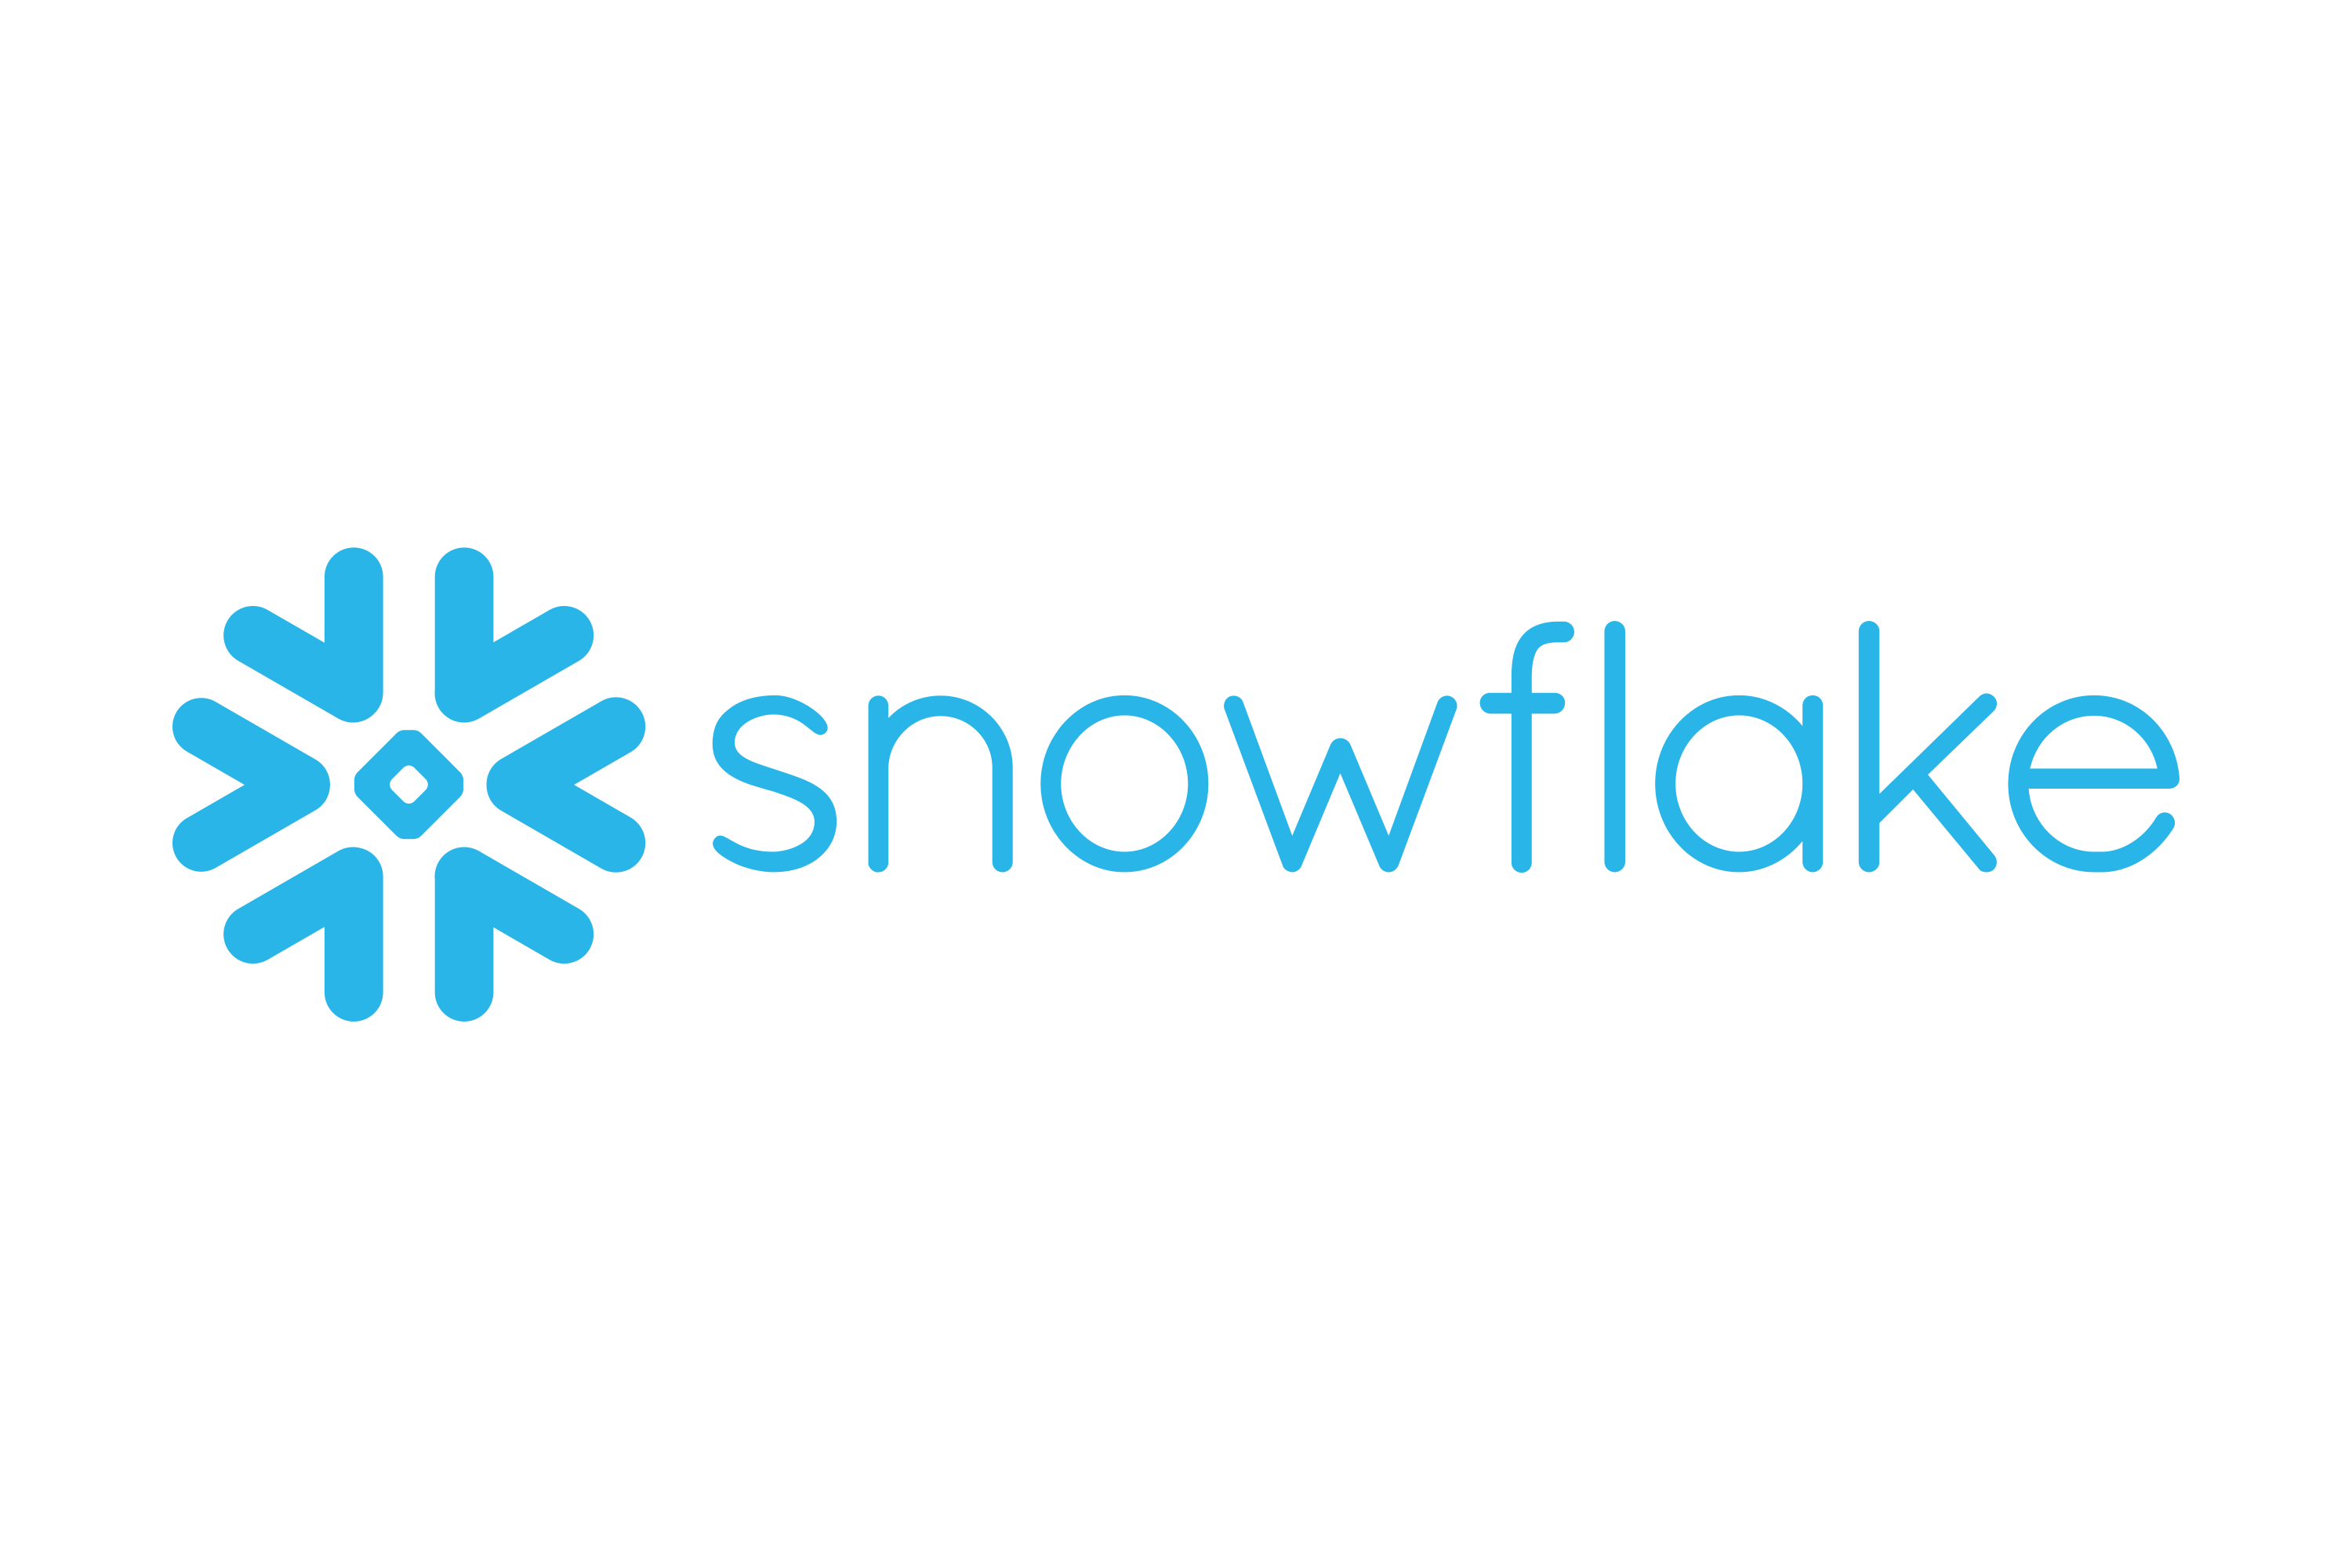 The Snowflake company's logo